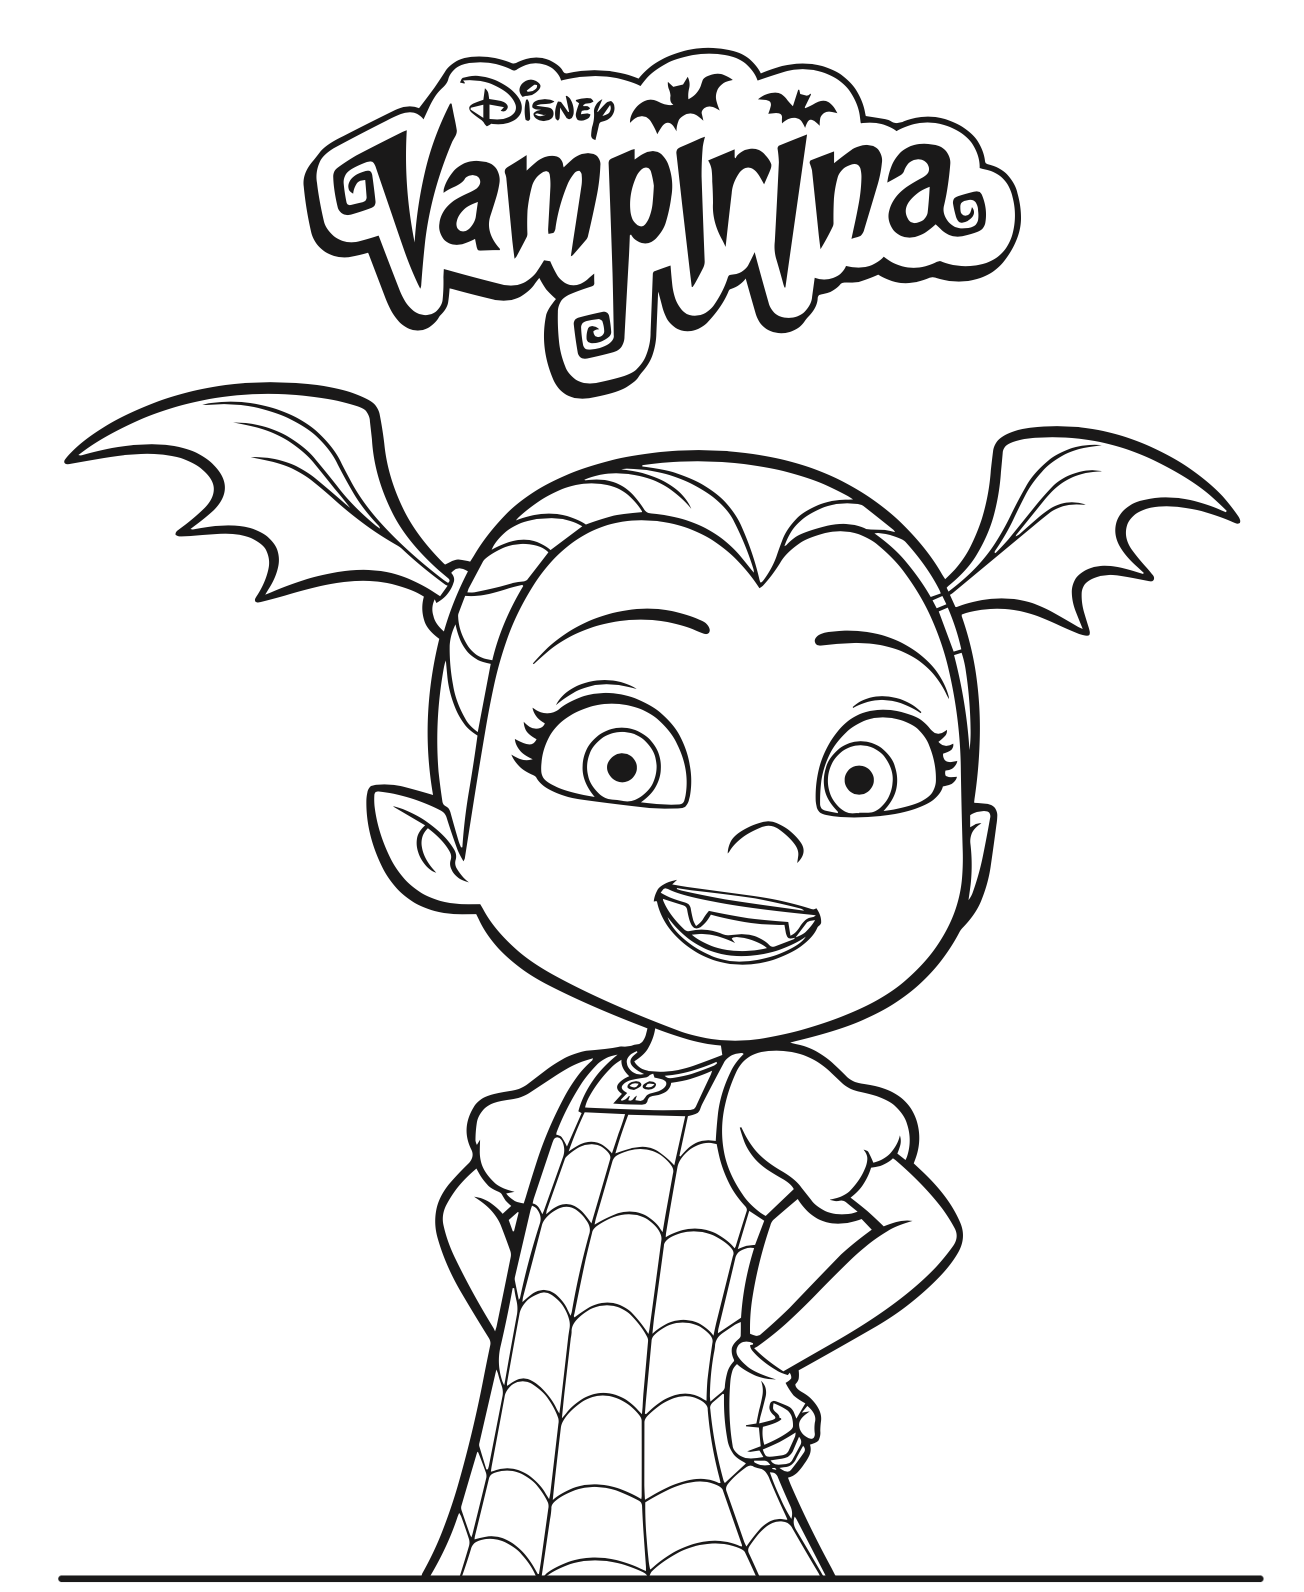 Disney Junior Vampirina Coloring Pages + DVD Giveaway